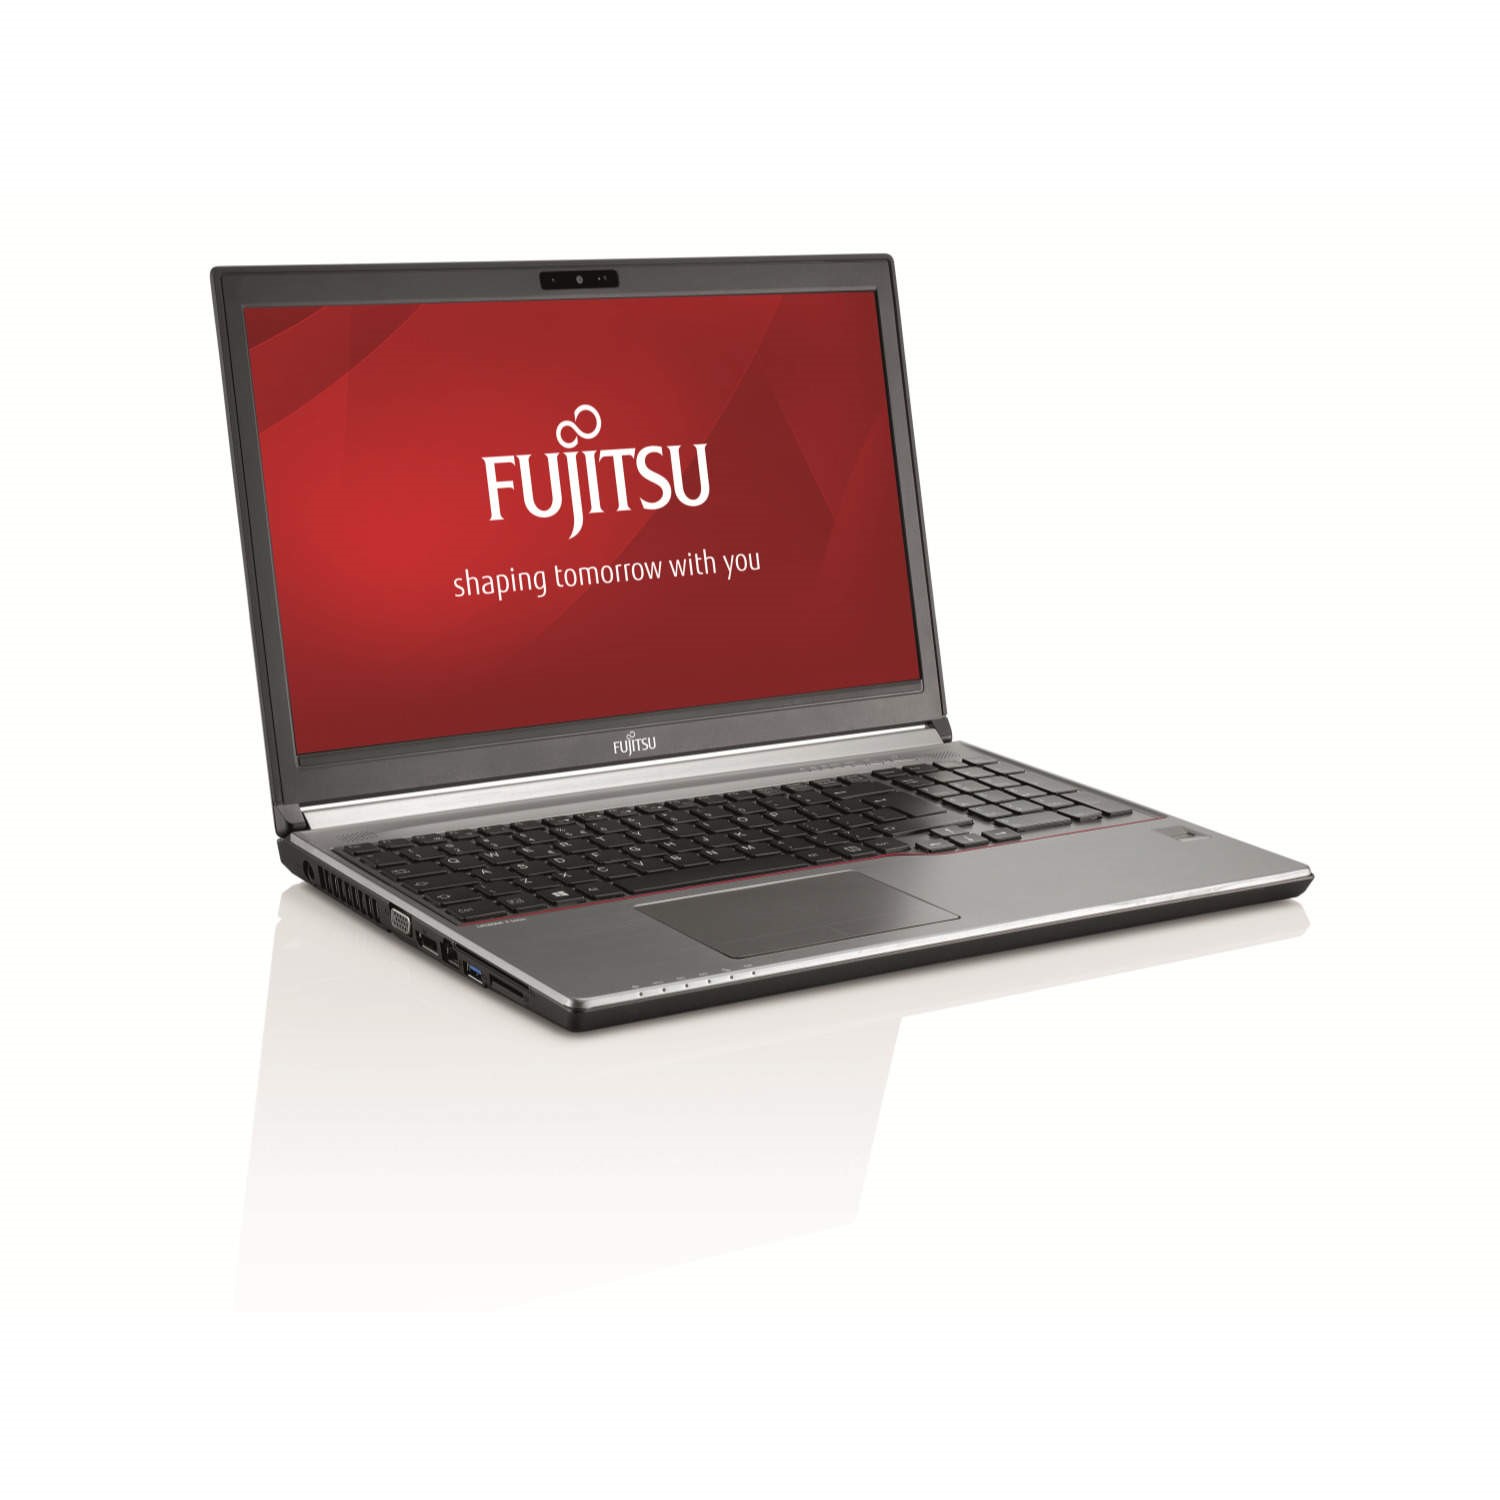 Fujitsu LIFEBOOK E754 4th Gen Core i7 8GB 256GB SSD Full HD Windows 7